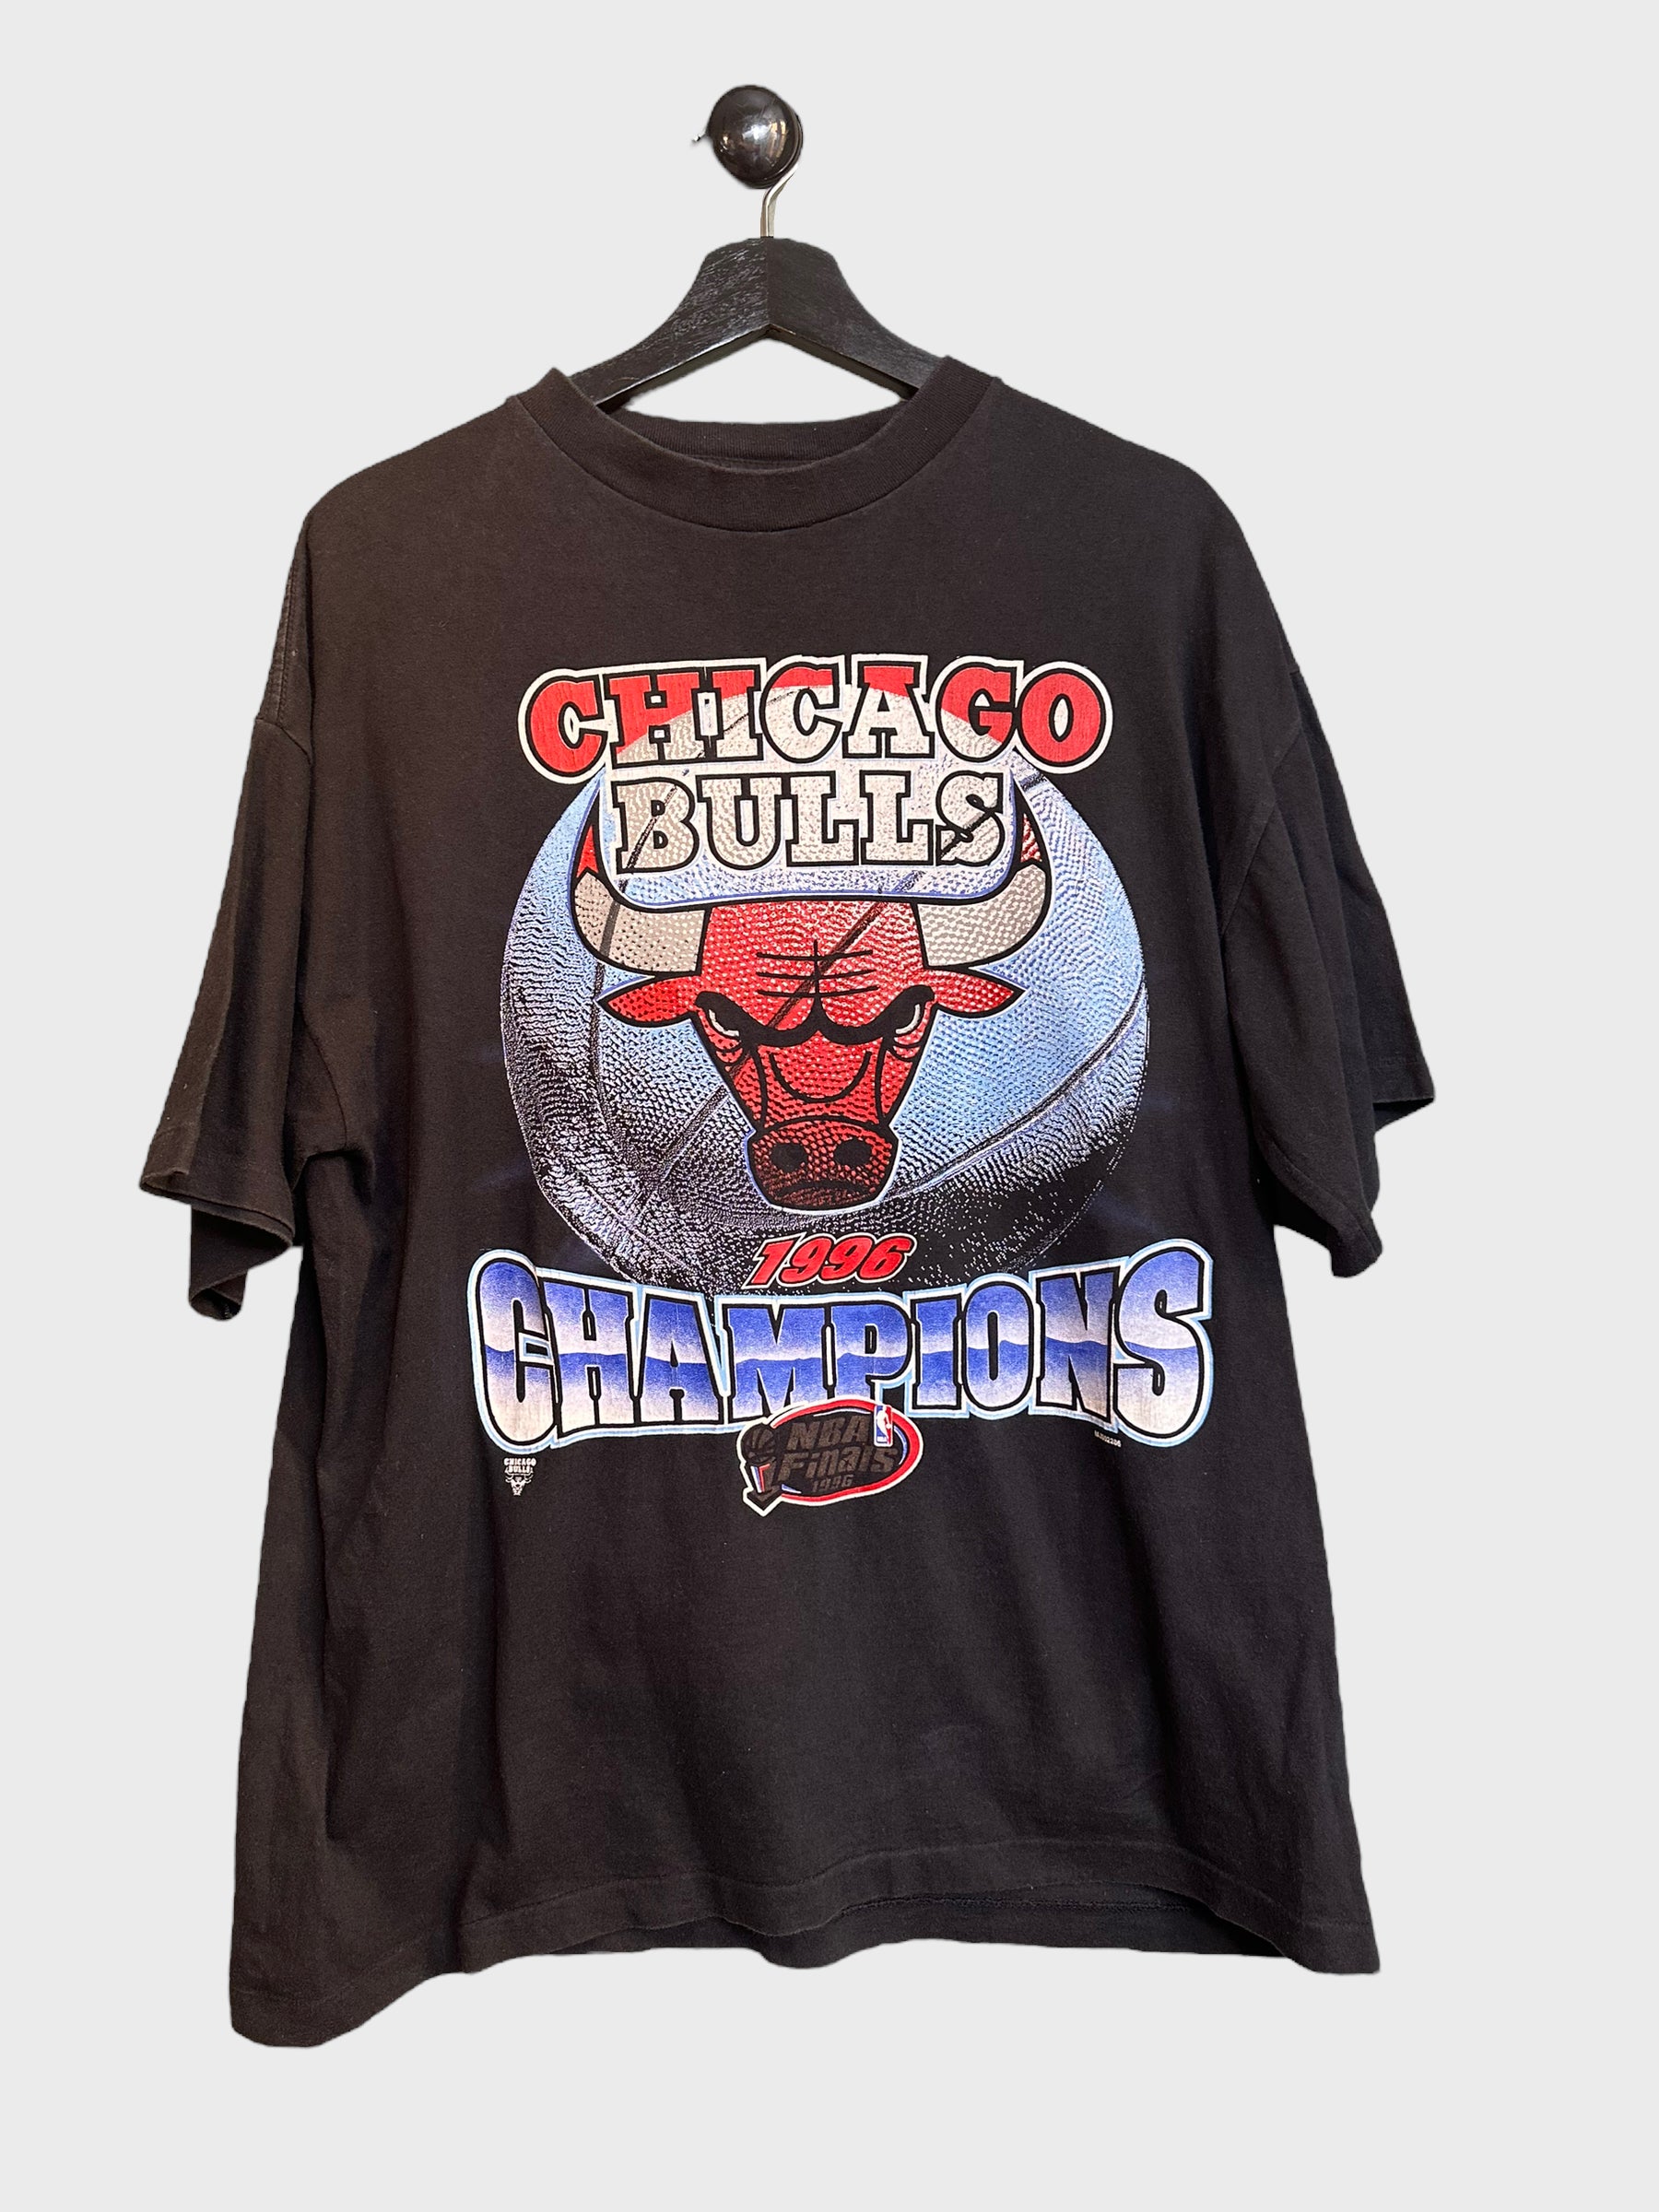 Chicago Bulls 1996 T-shirt